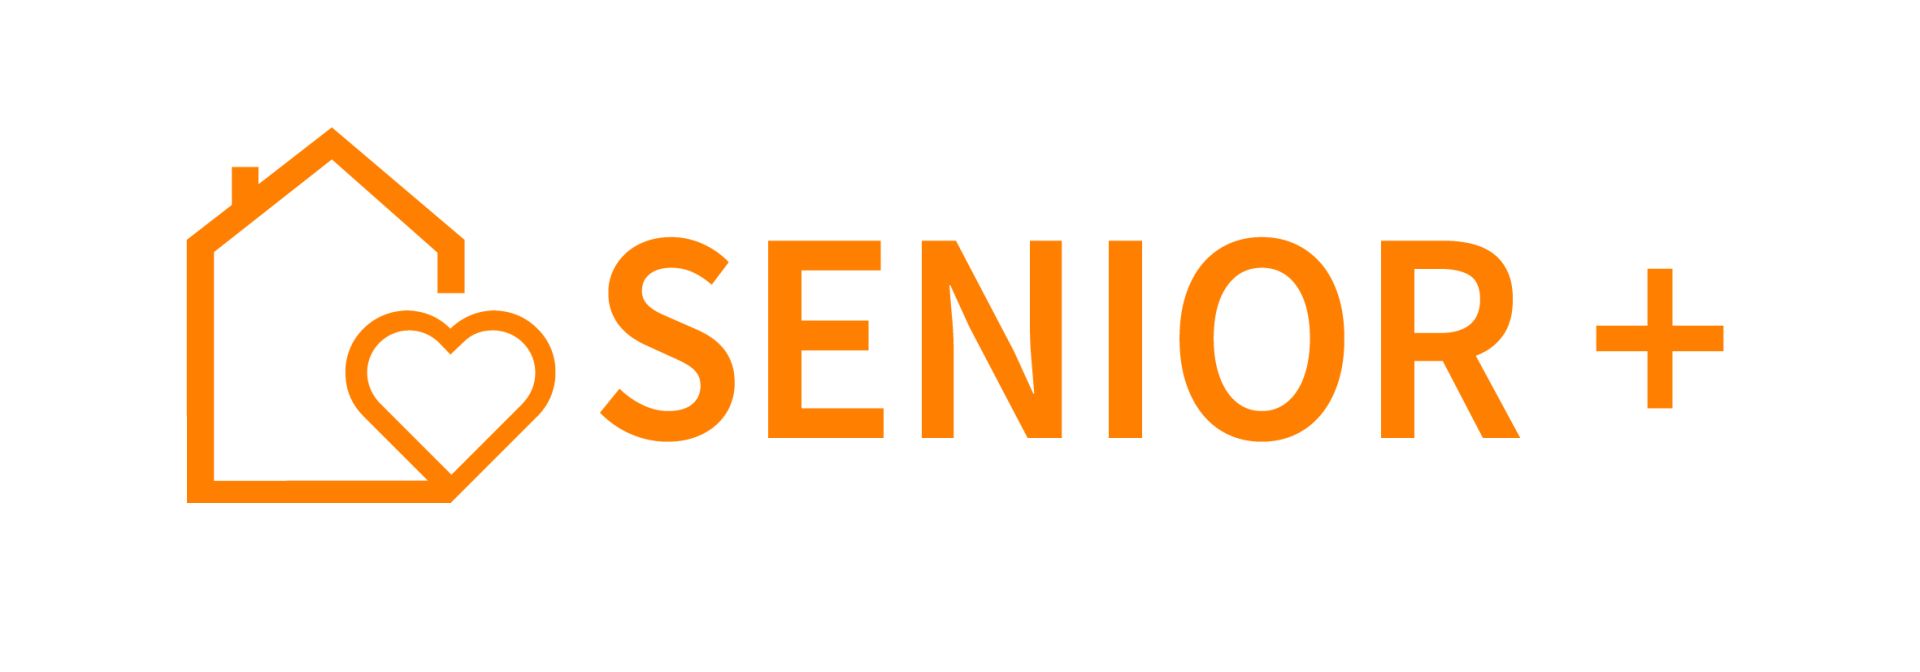 logo Senior+